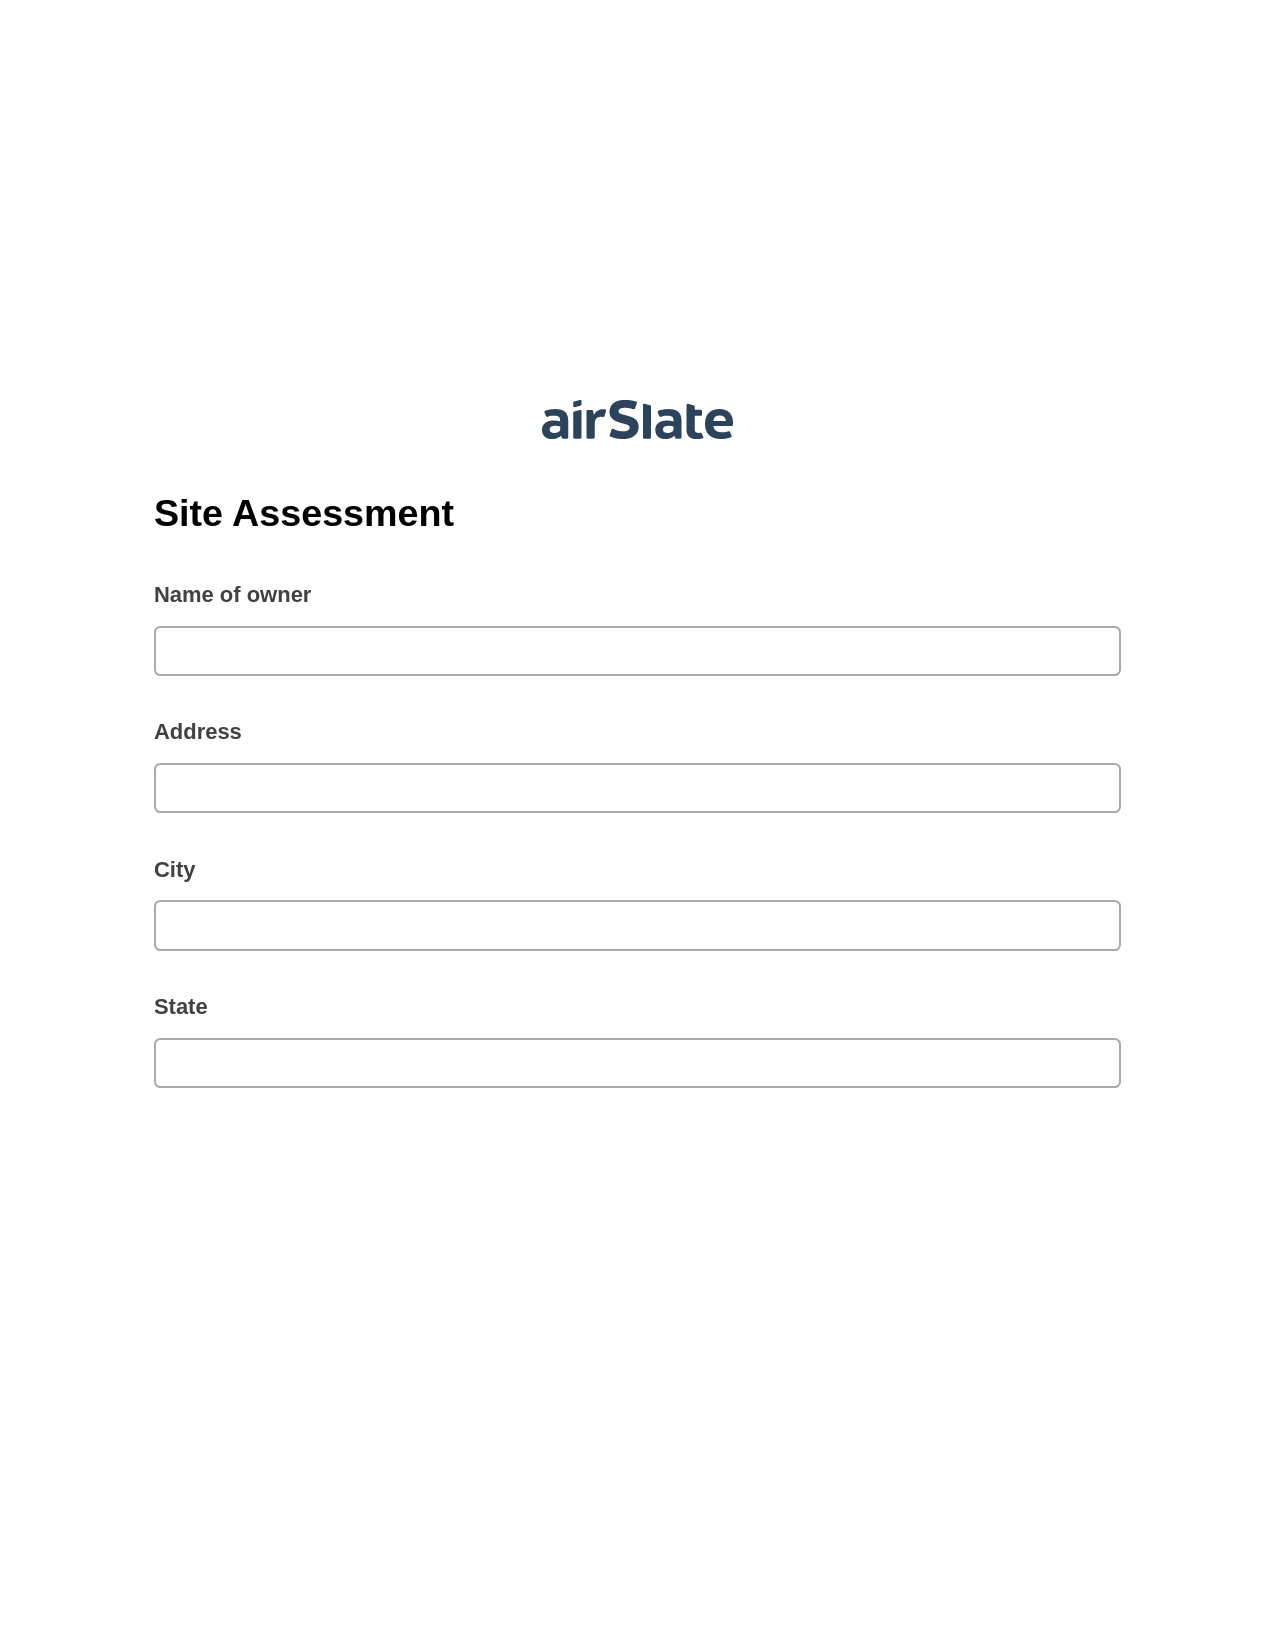 Multirole Site Assessment Pre-fill Slate from MS Dynamics 365 Records Bot, Revoke Access Bot, Post-finish Document Bot